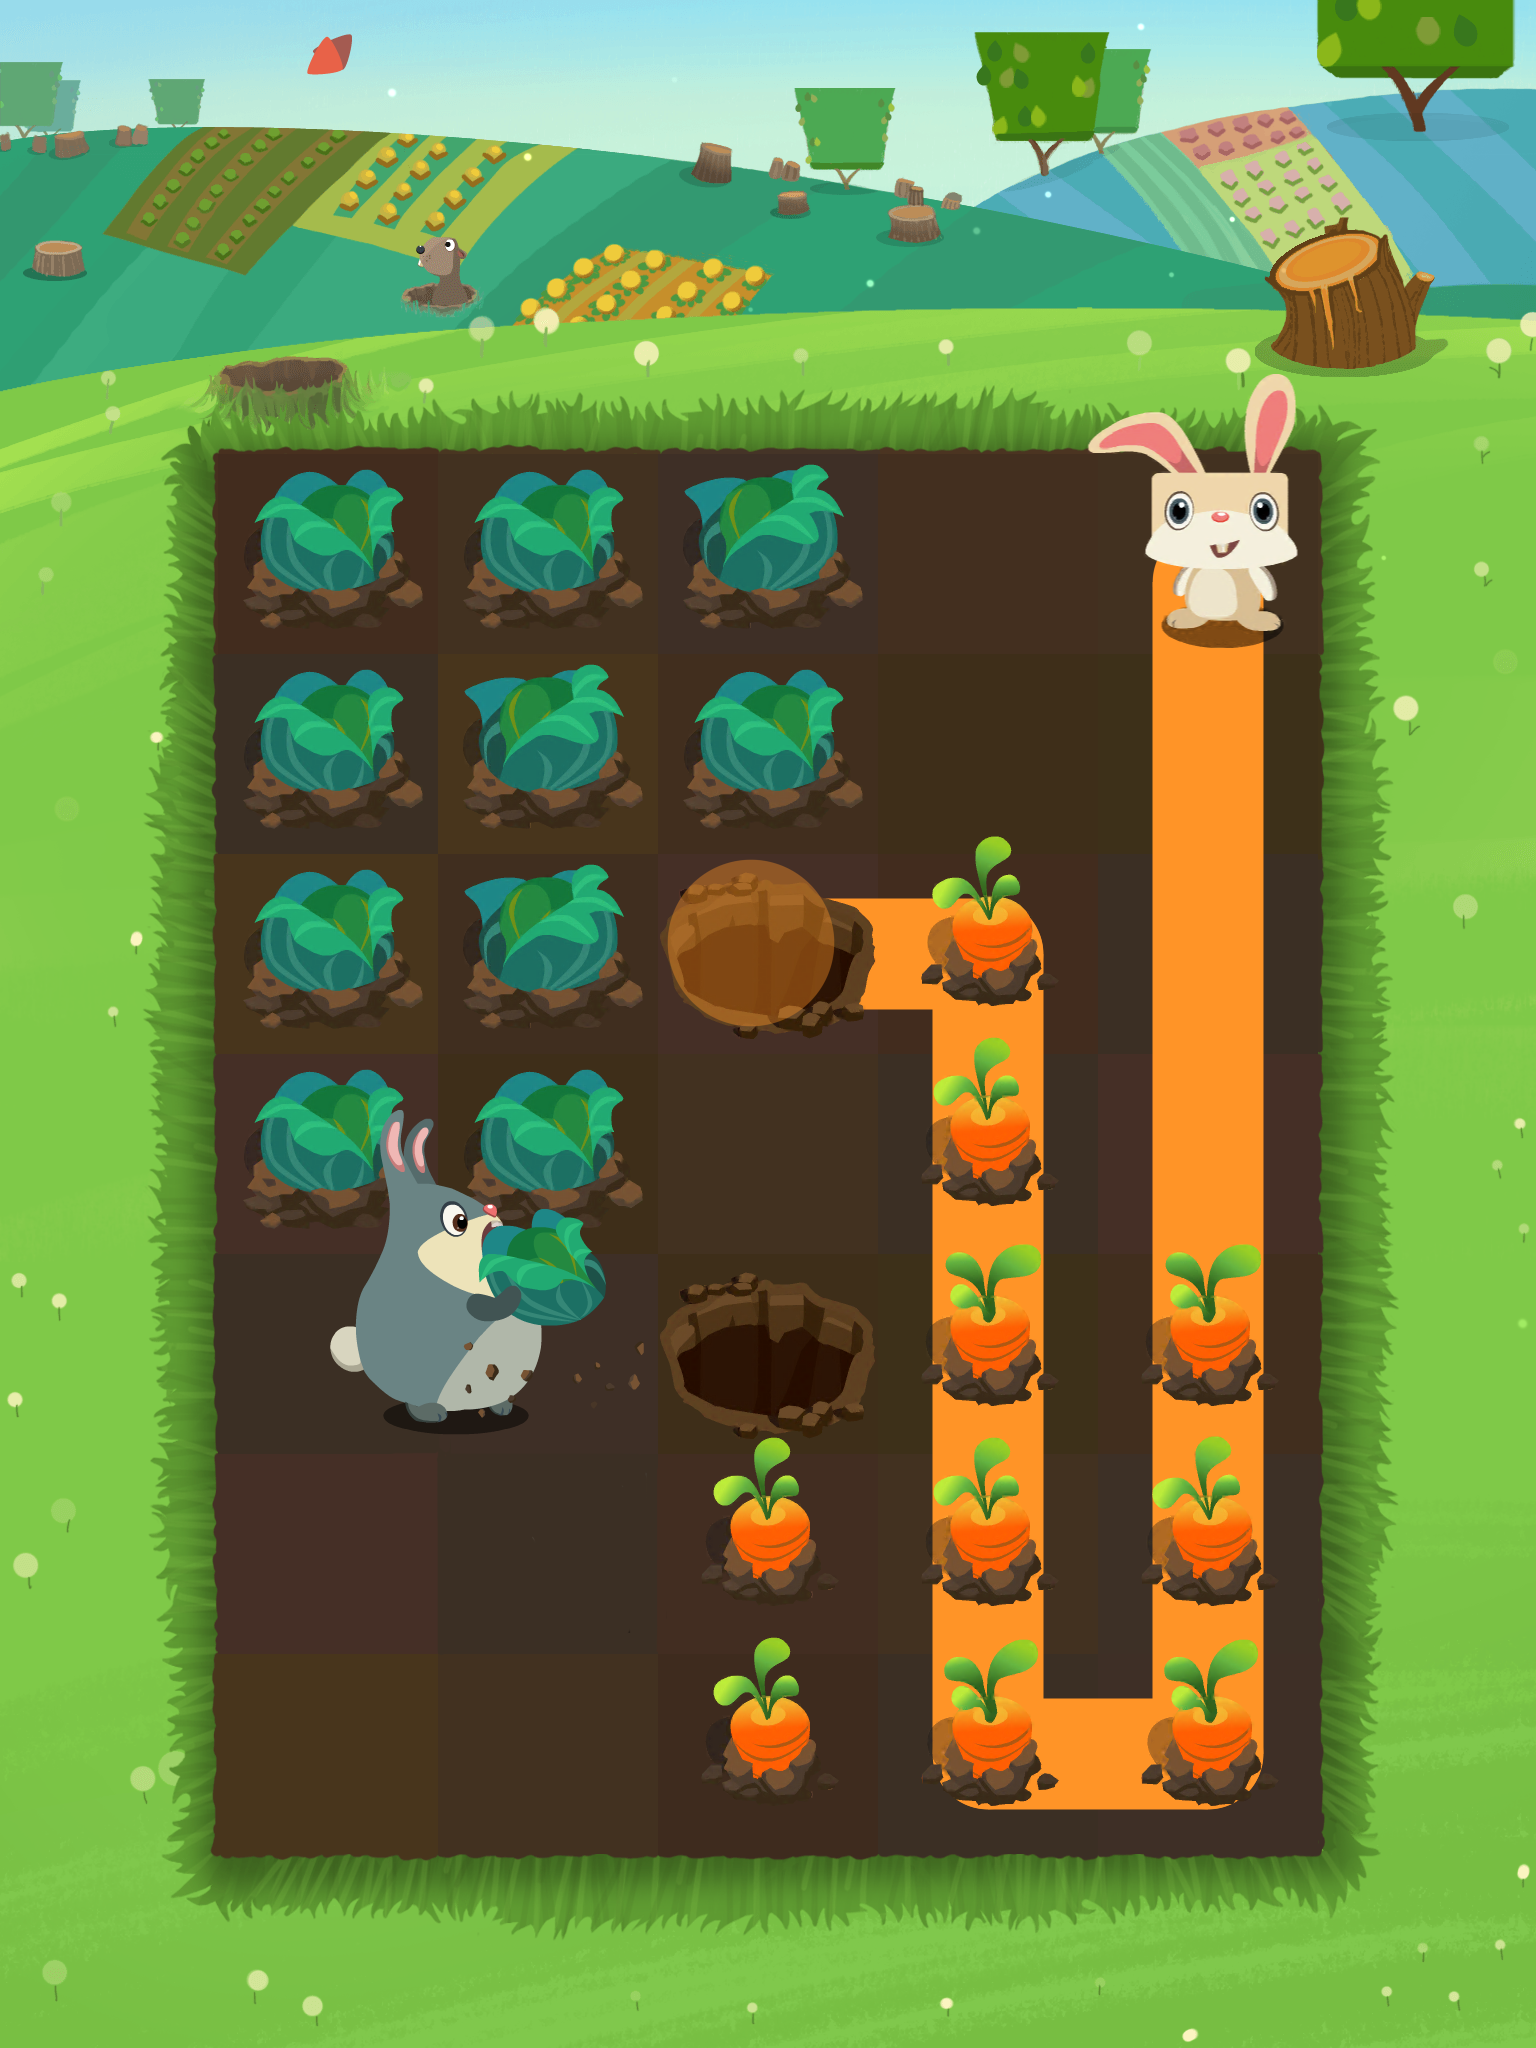 Patchmania game screenshot